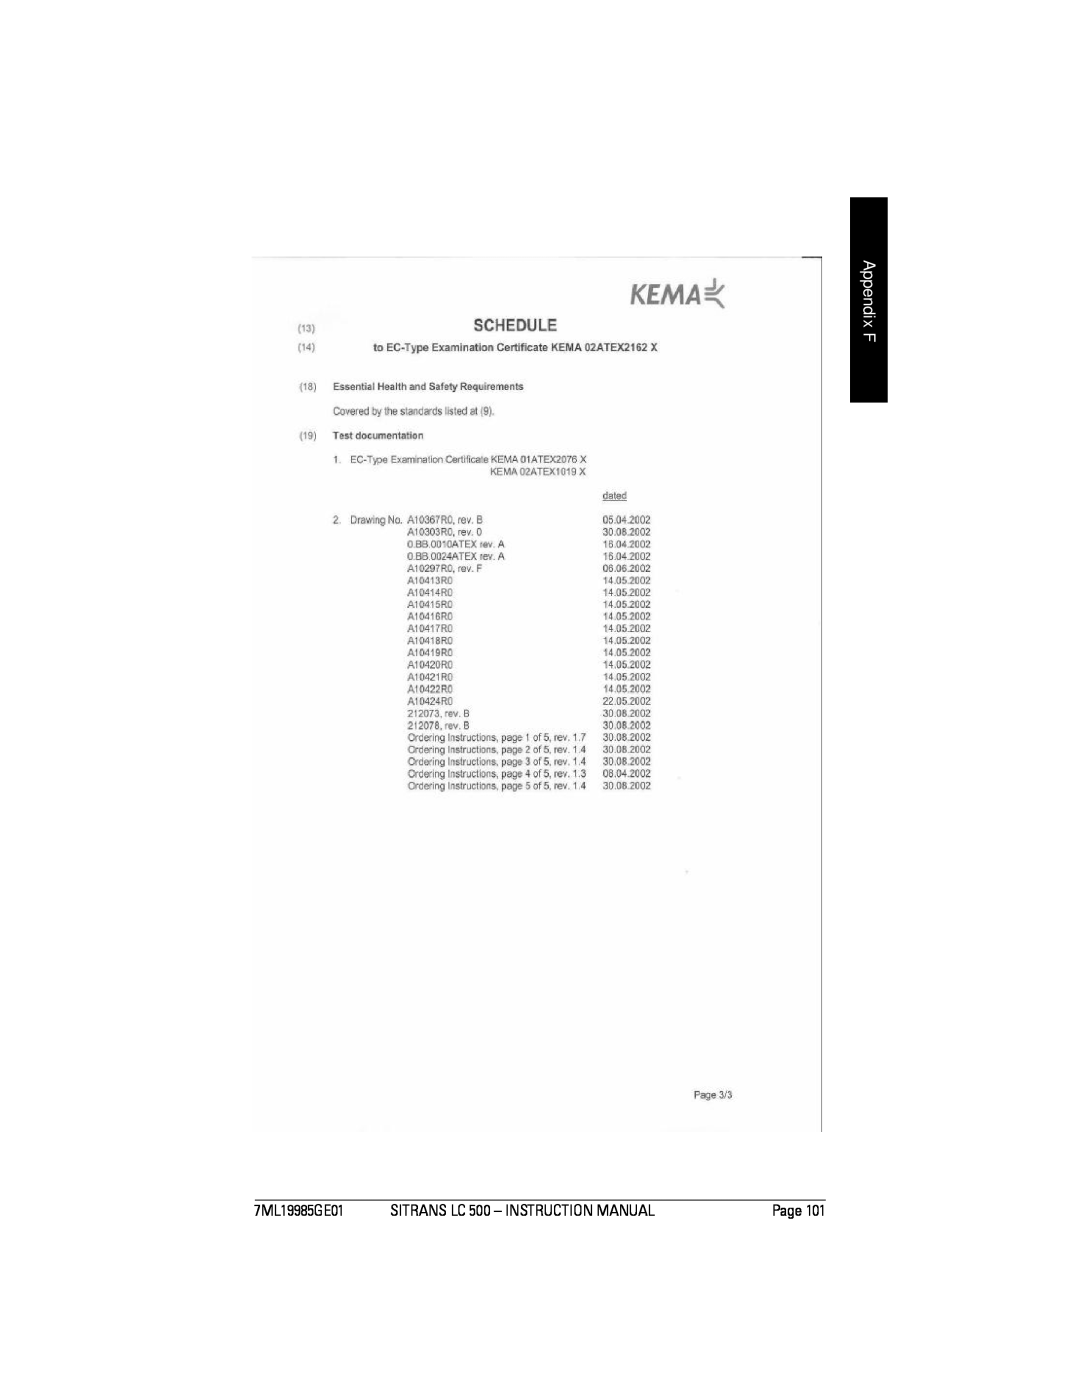 Siemens Sitrans instruction manual Appendix F, 7ML19985GE01, SITRANS LC 500 - INSTRUCTION MANUAL, Page 